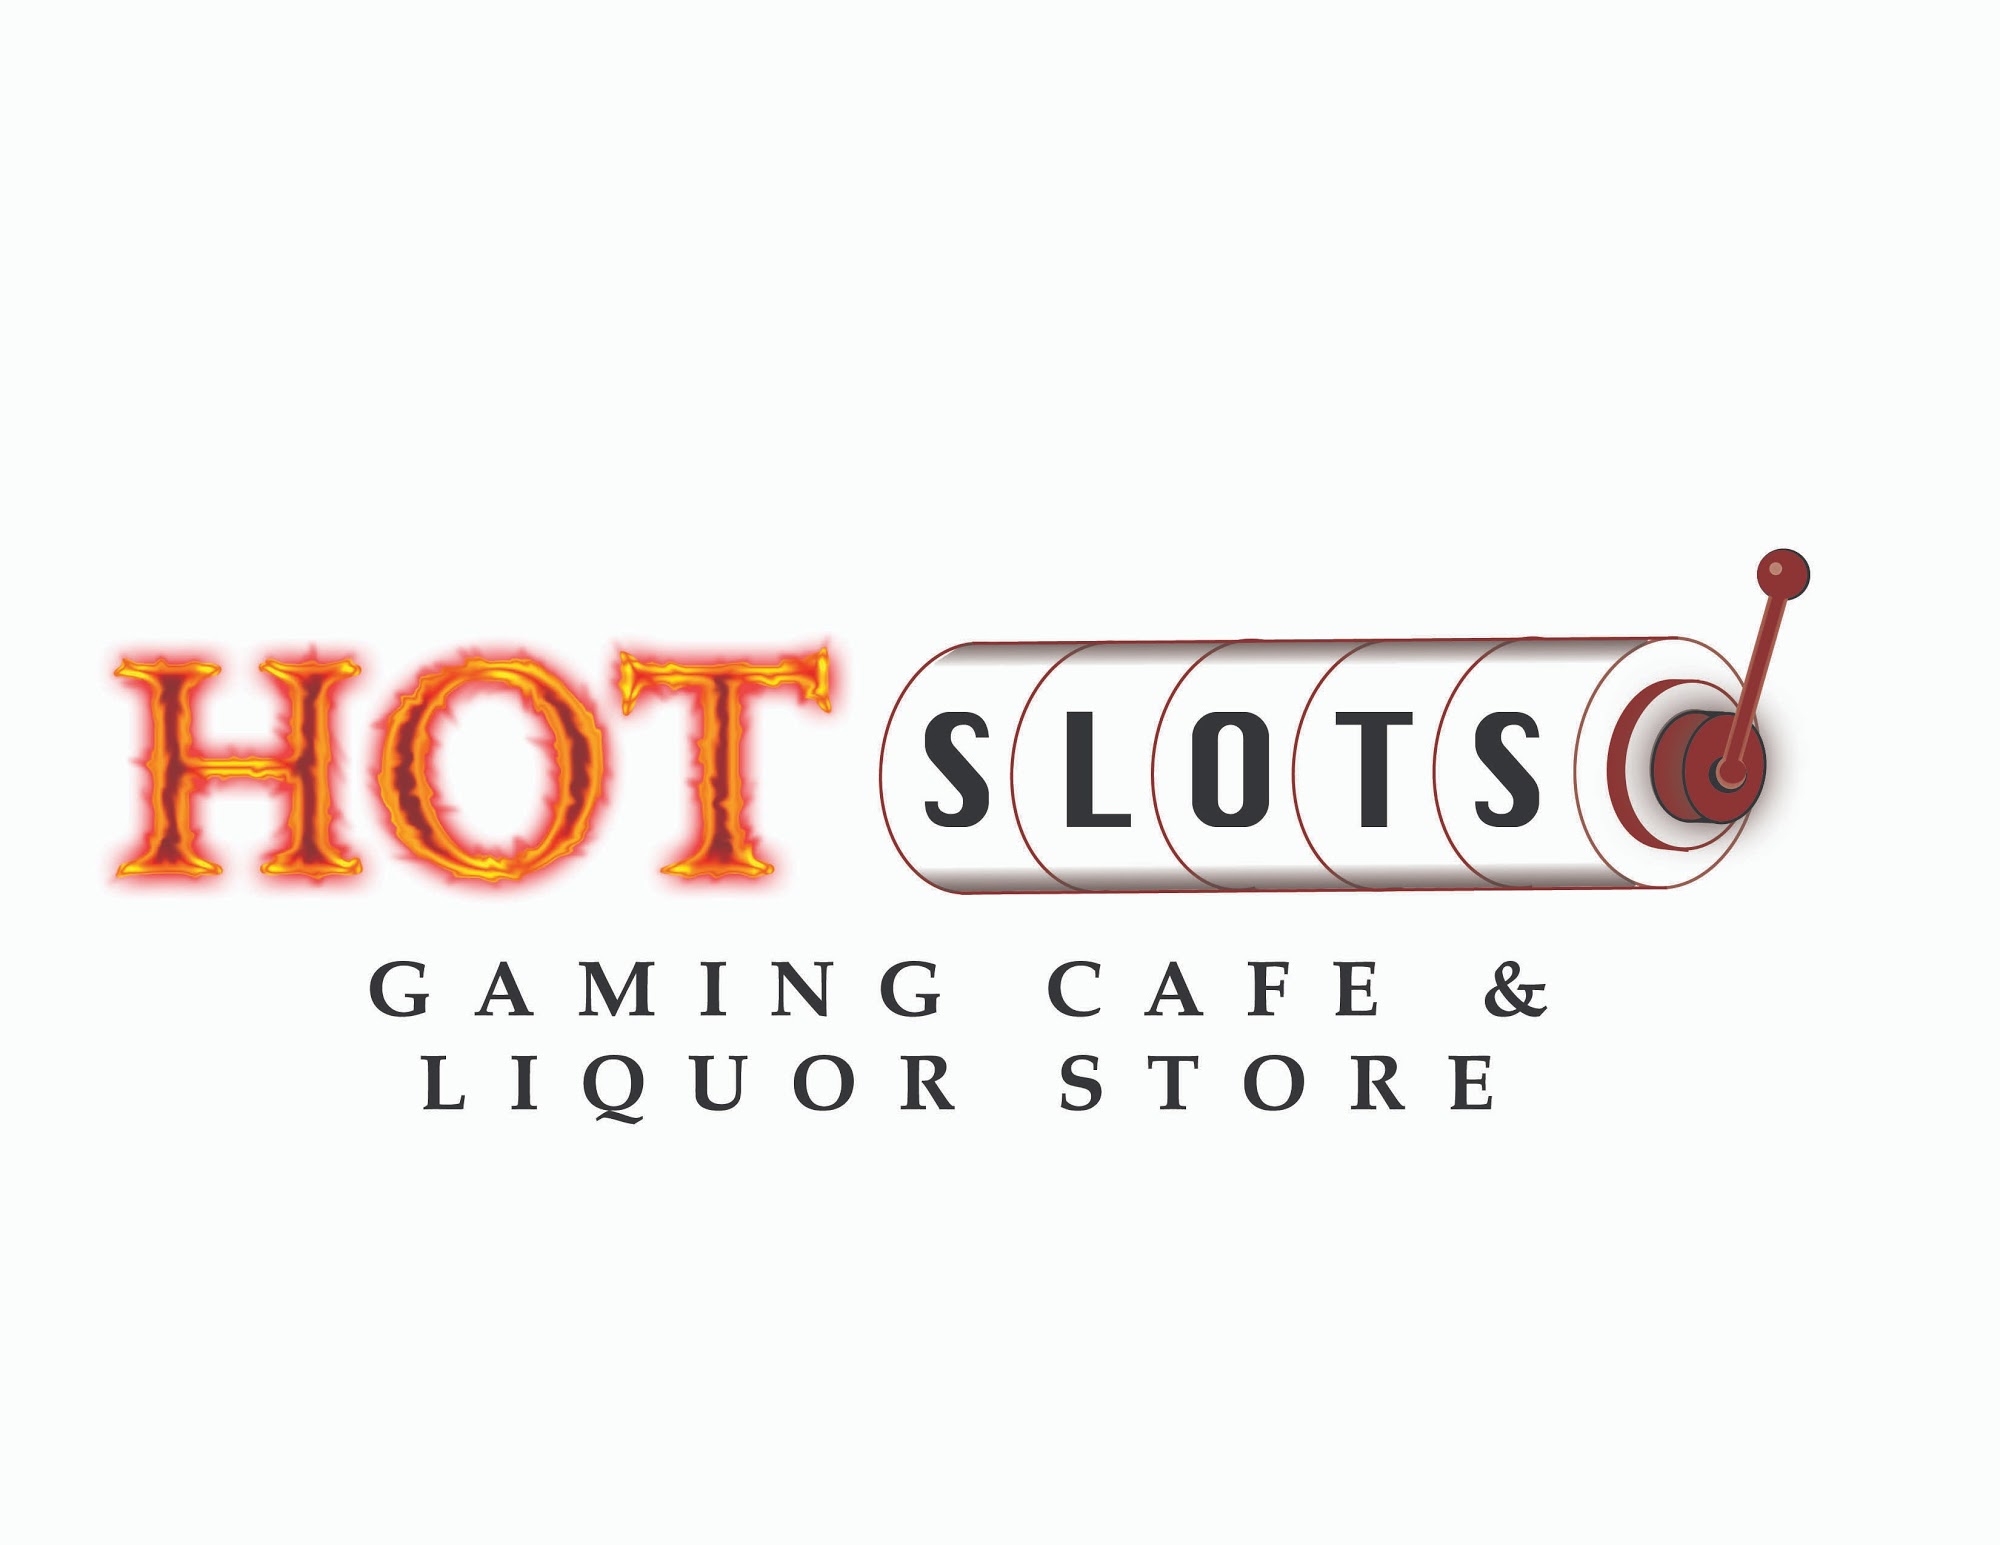 Hot Slots Gaming Cafe & Liquor Store